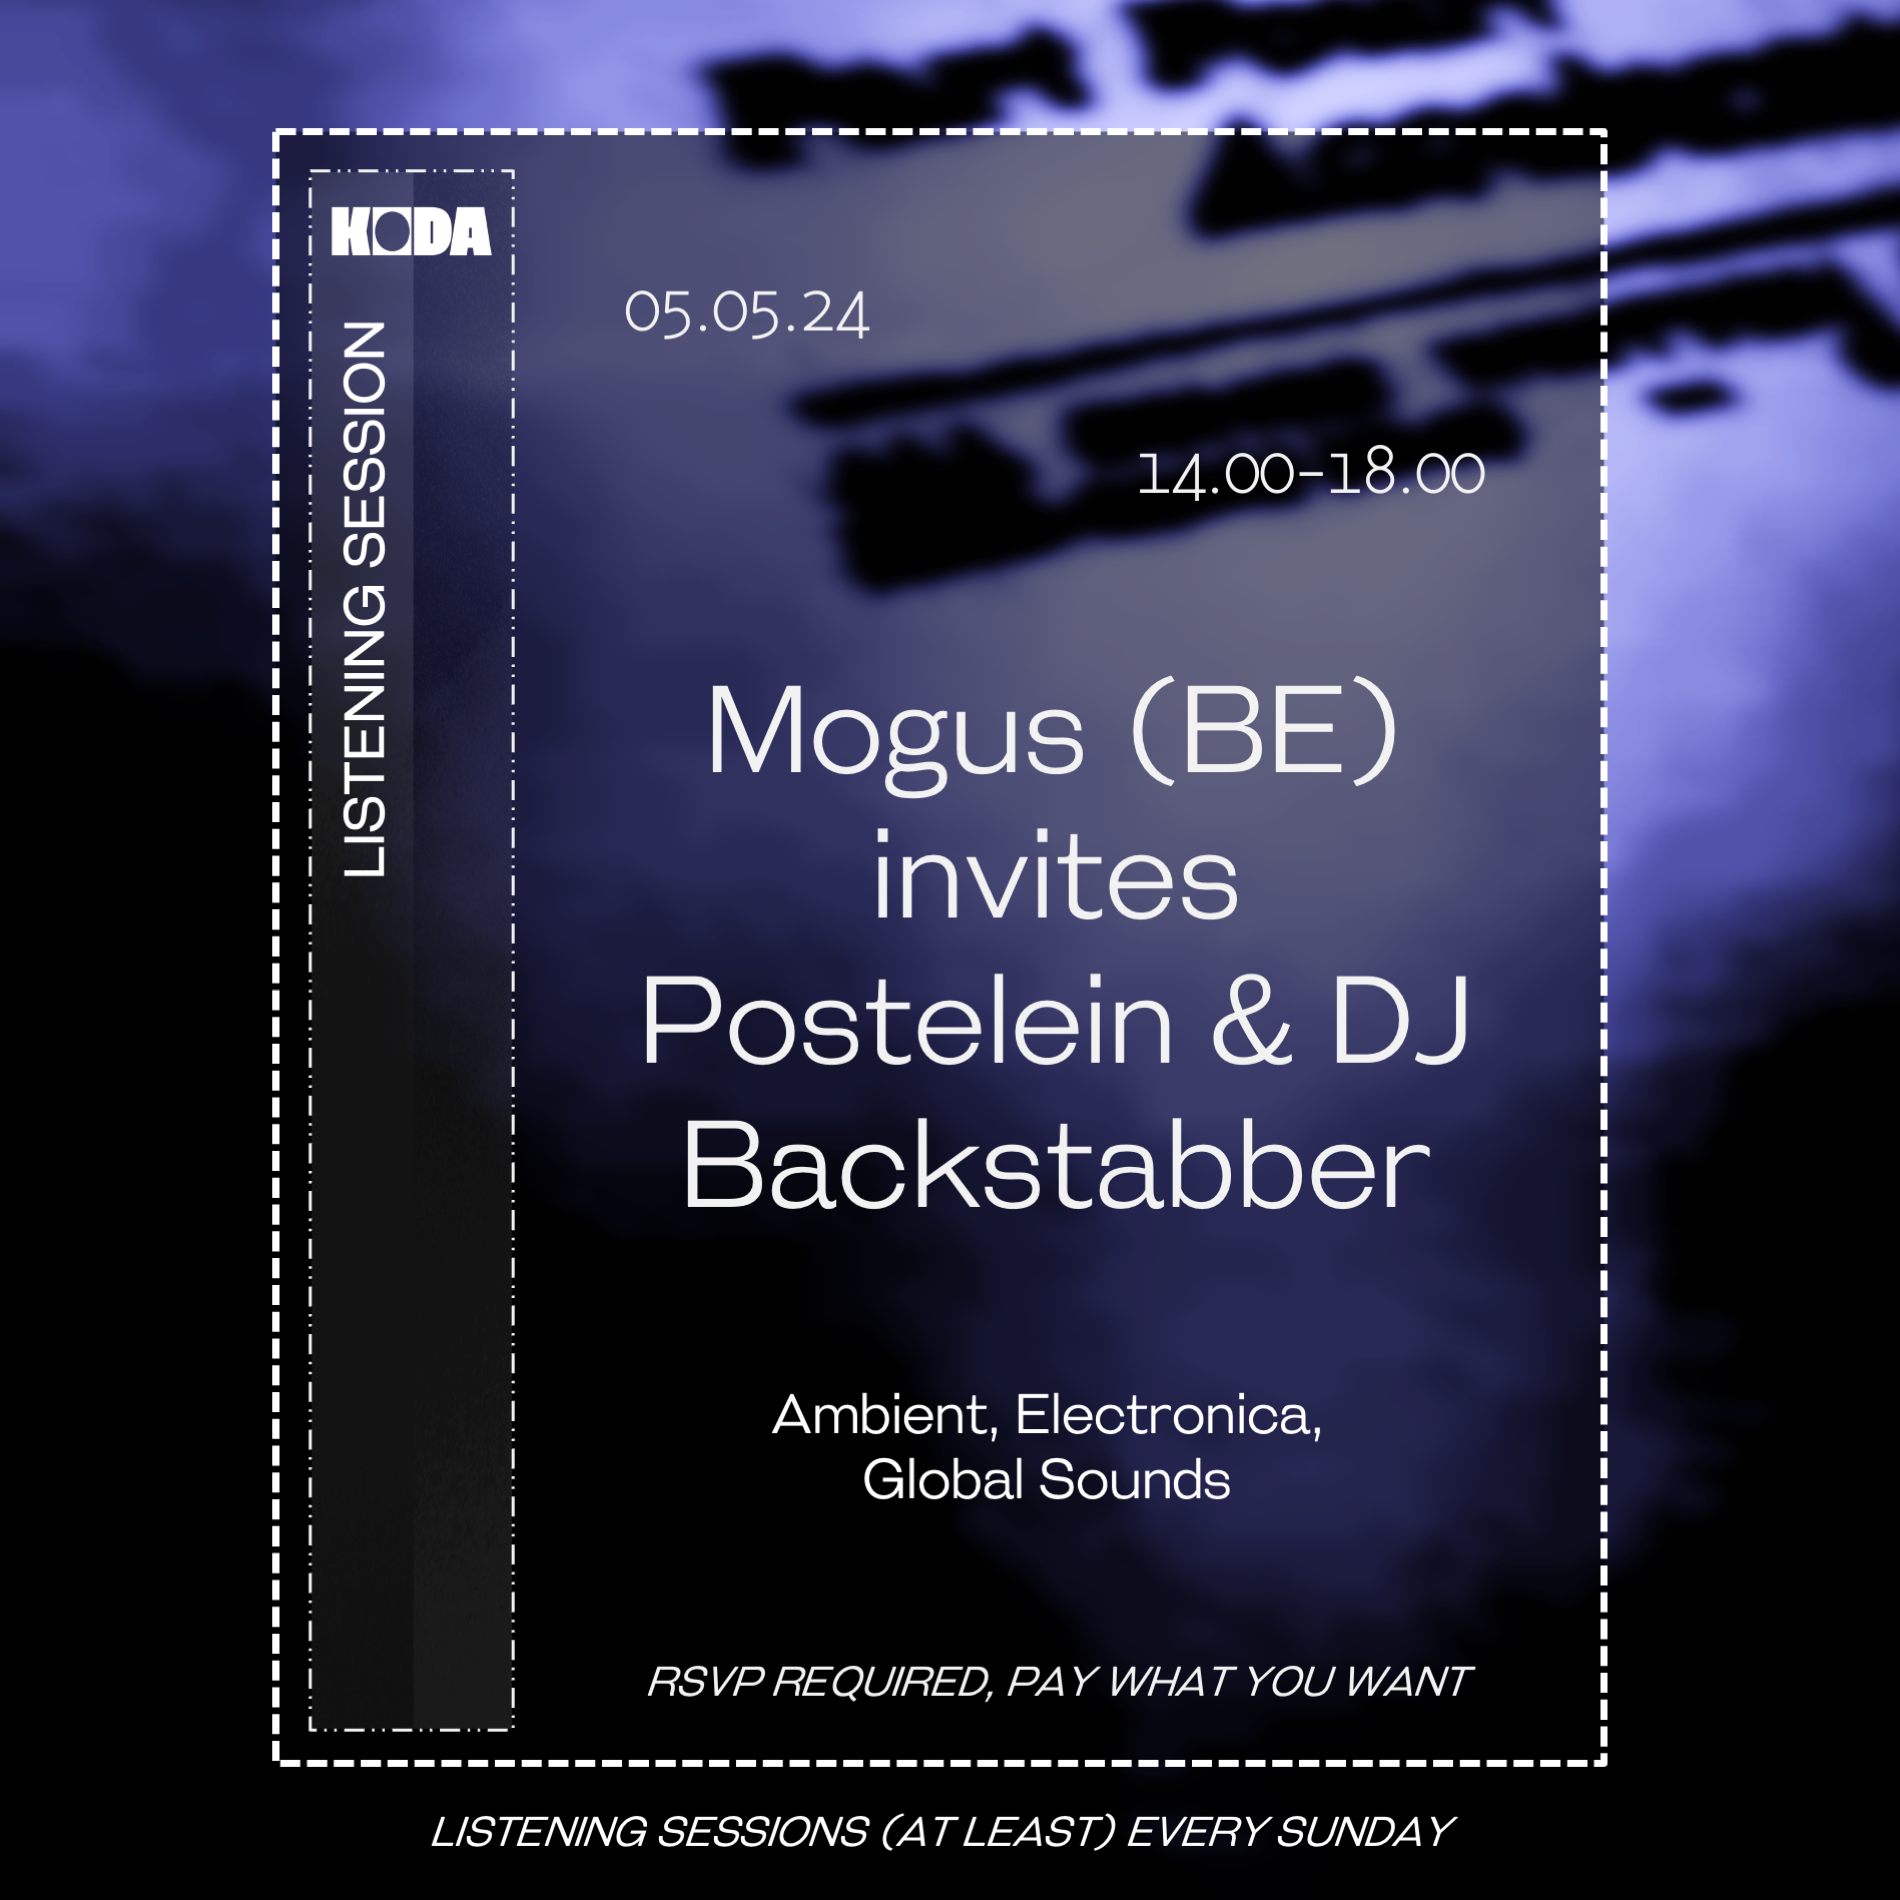 Mogus invites Postelein & DJ Backstabber - フライヤー表